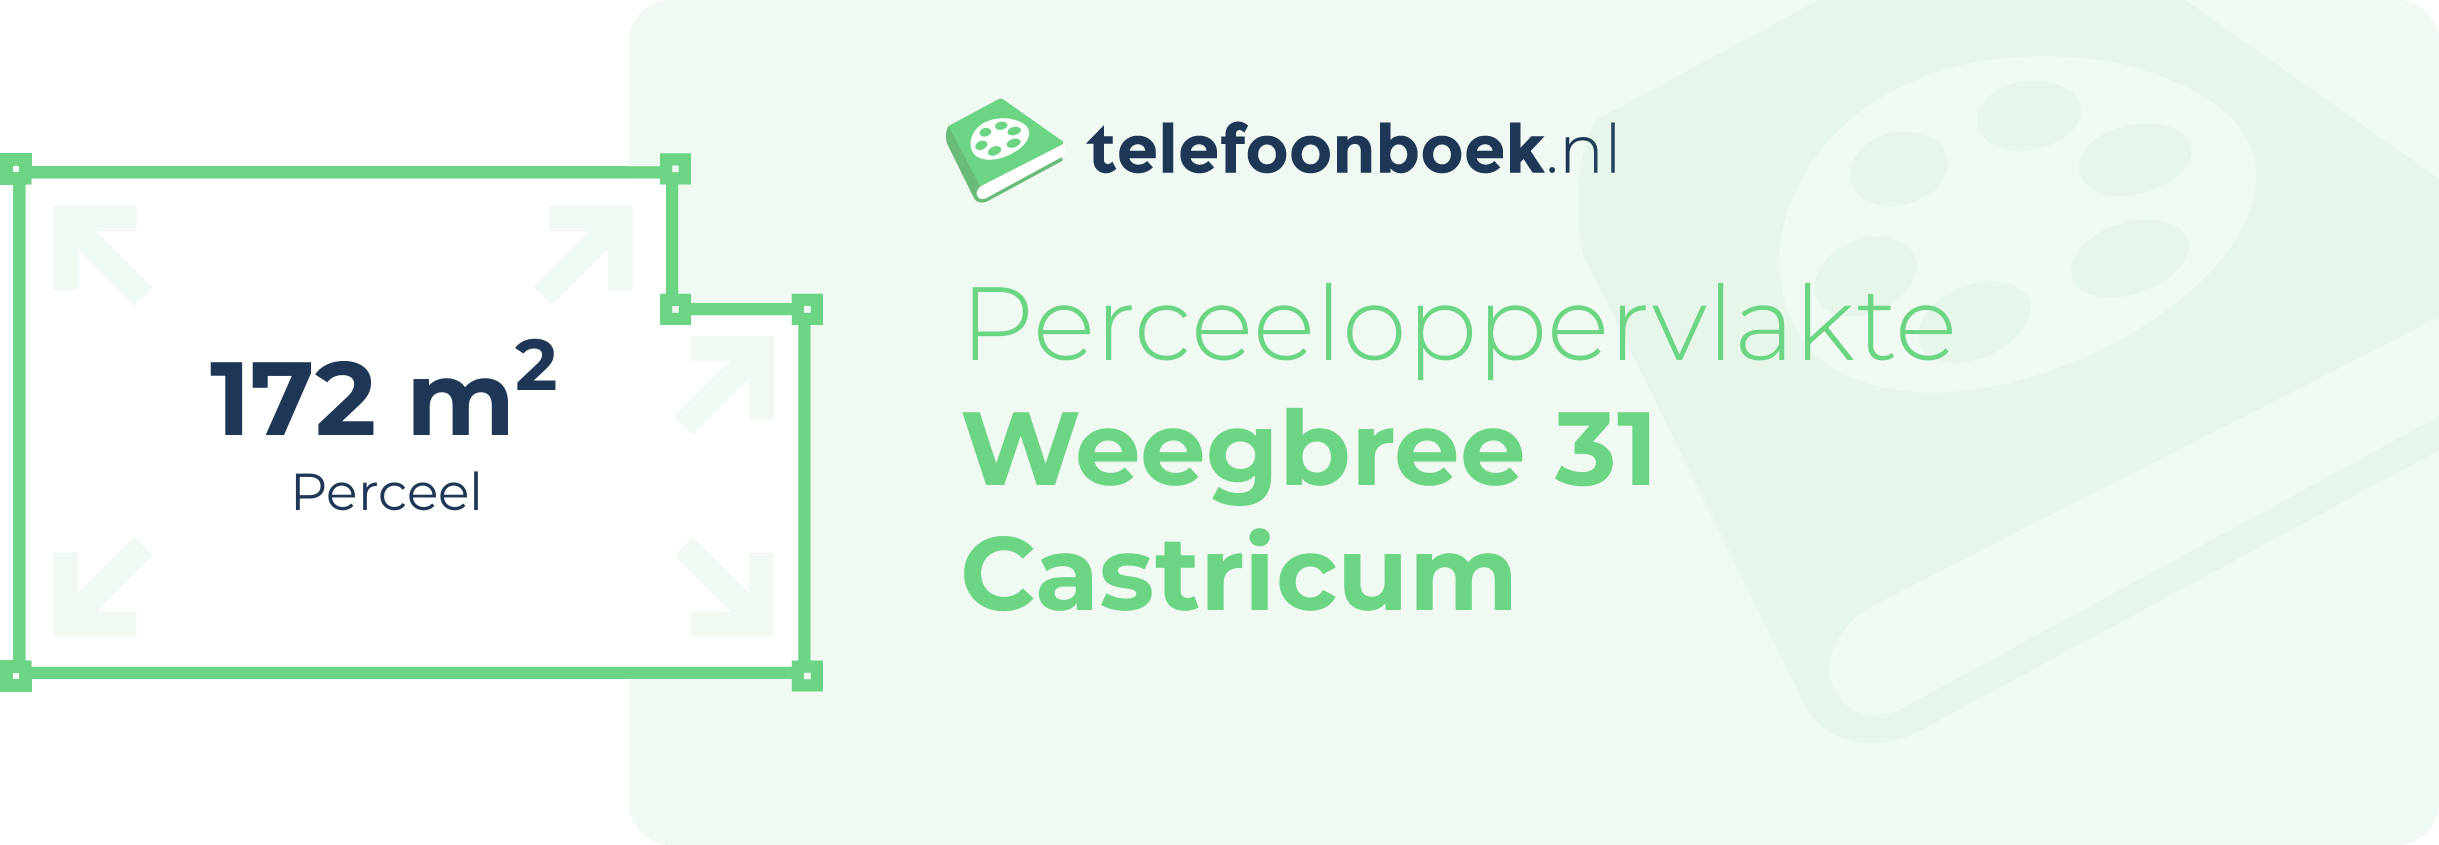 Perceeloppervlakte Weegbree 31 Castricum